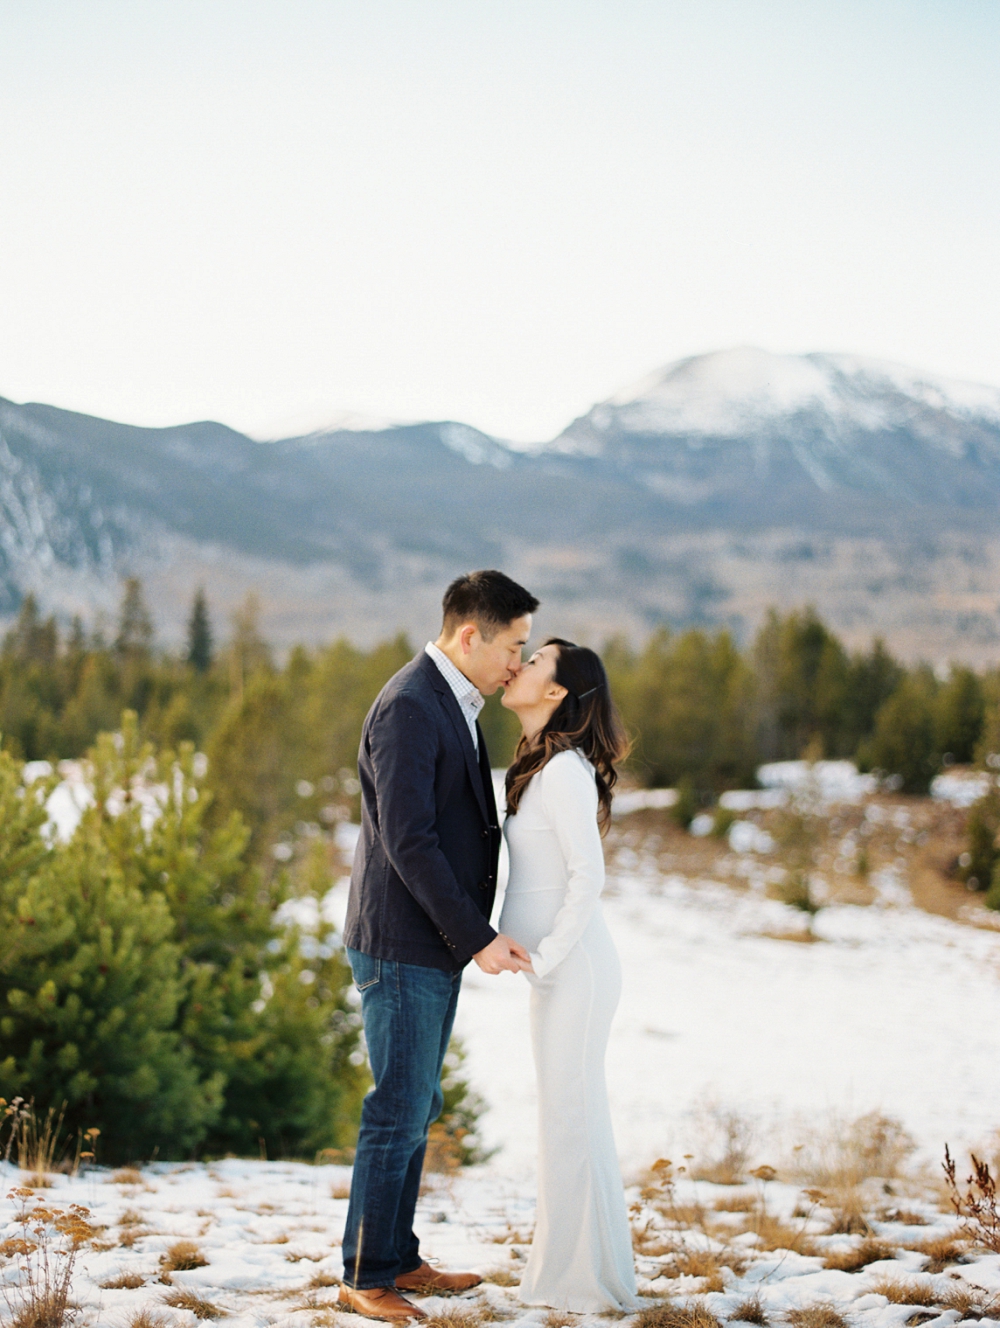 Dani-Cowan-Photography-Snowy-Colorado-Mountain-Maternity-Photoshoot64_WEB